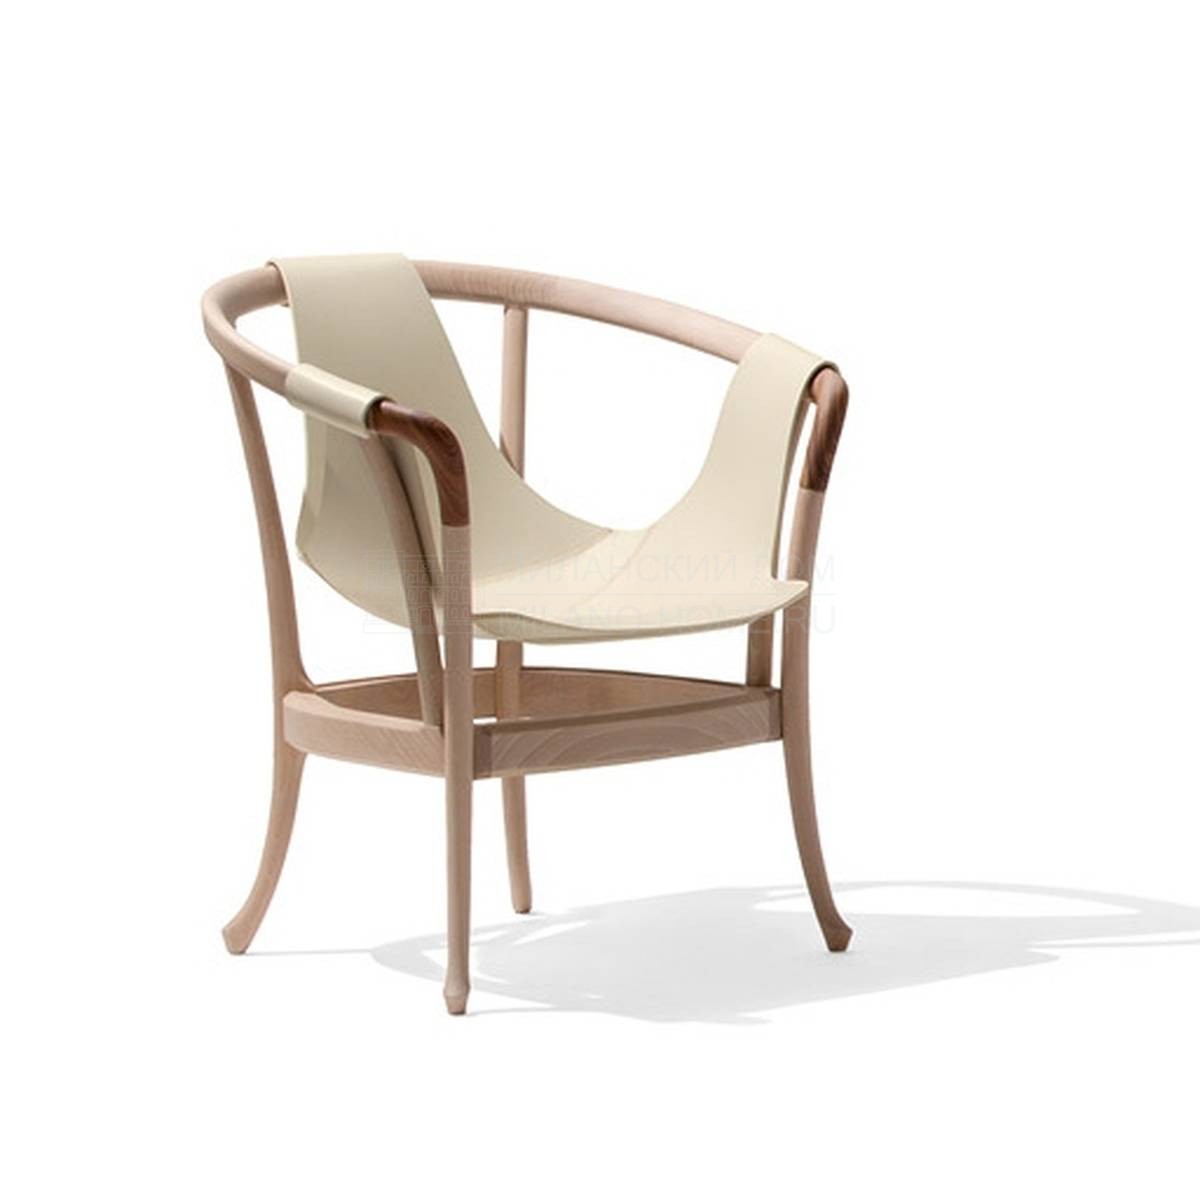 Кожаное кресло Progetti pure low / 30230 из Италии фабрики GIORGETTI